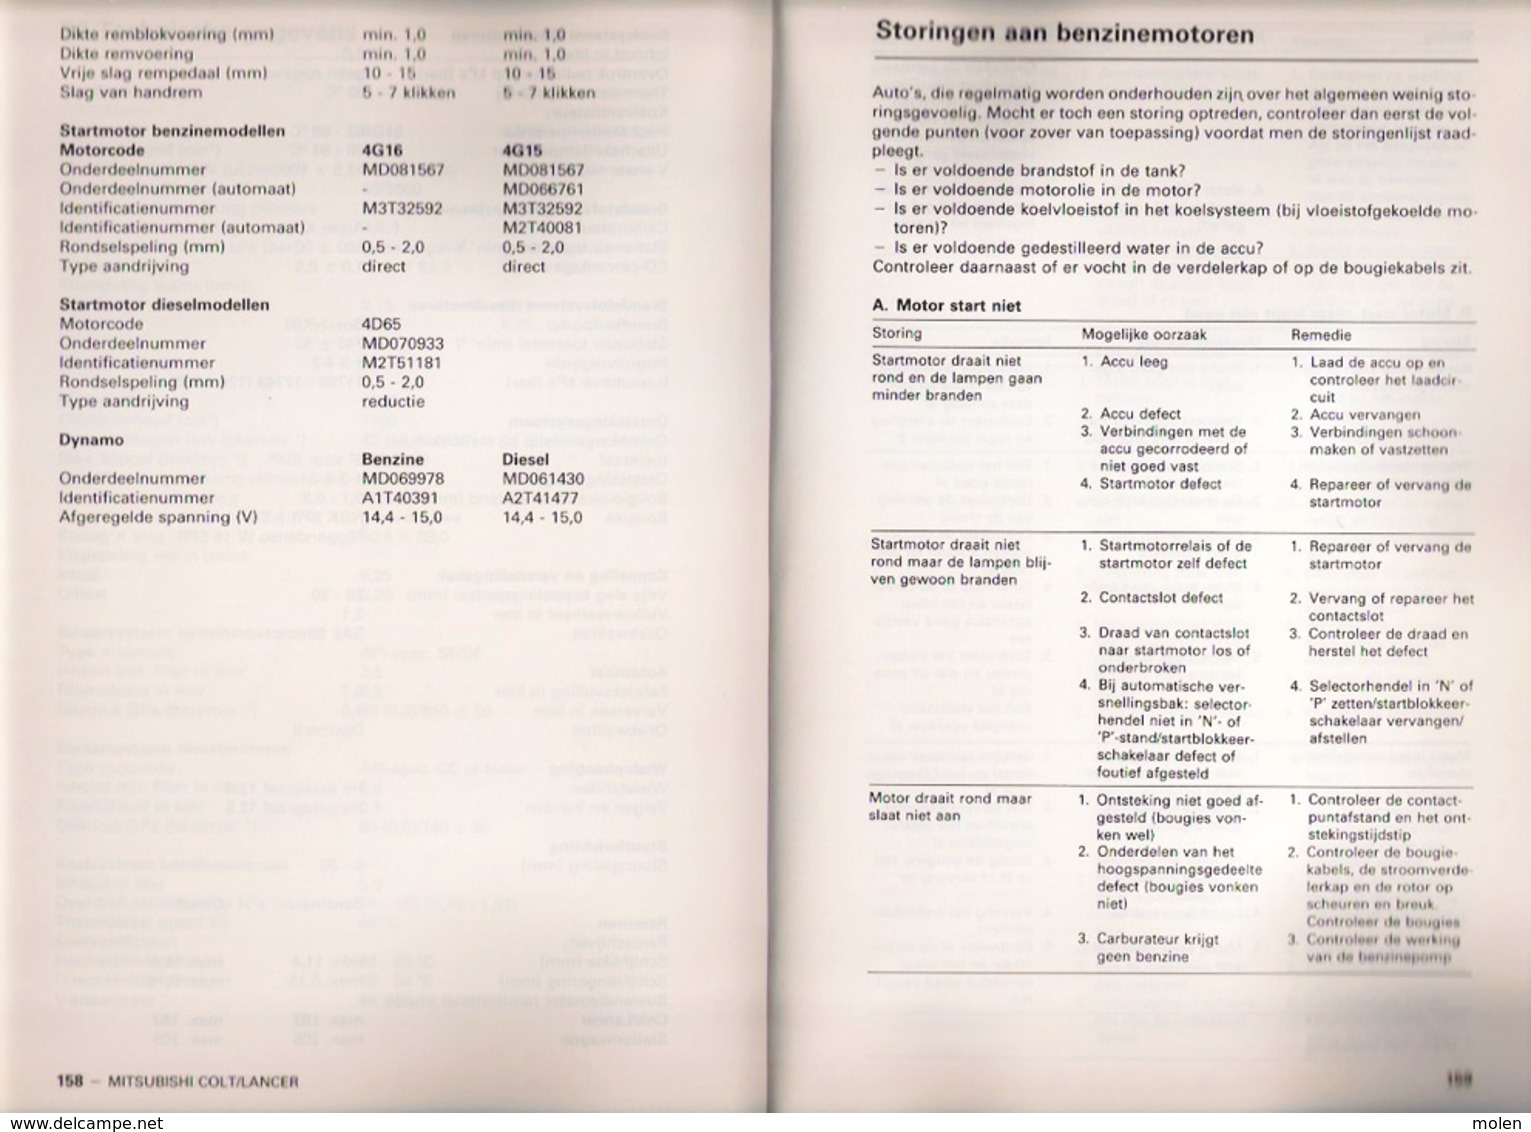 VRAAGBAAK MITSUBISHI COLT/LANCER modellen 1984-1986 Handleiding onderhoud & afstelgegevens ©1987 174blz OLVING AUTO Z935